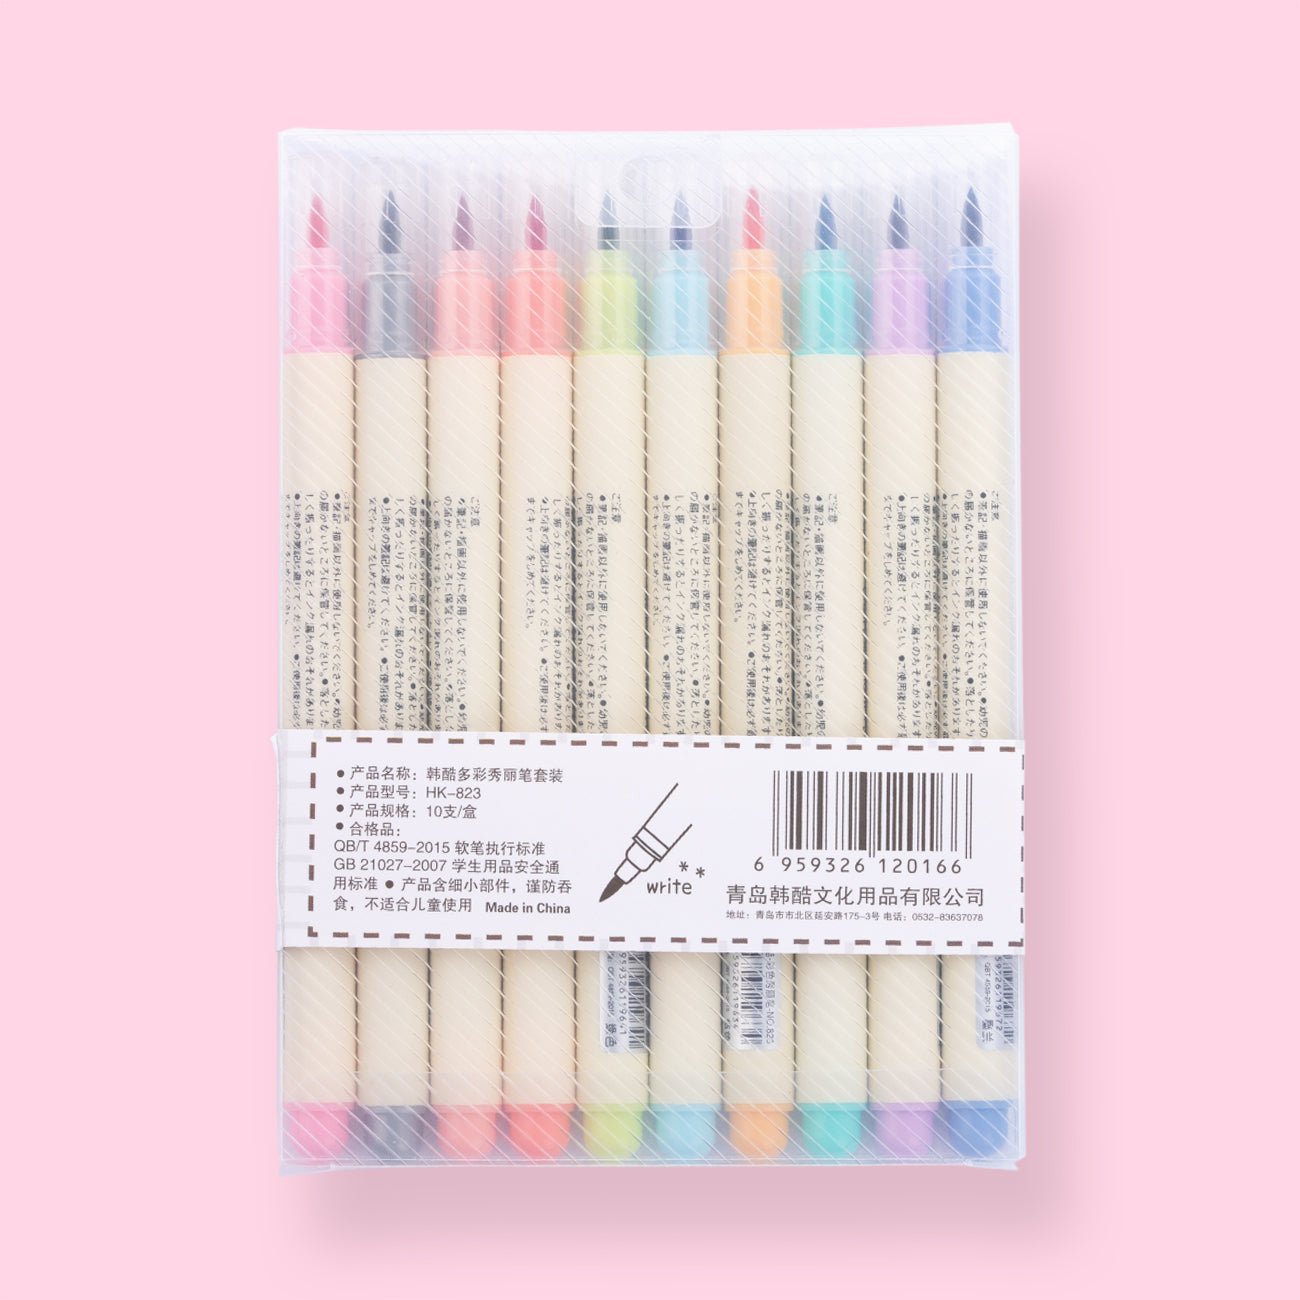 Future Color Lettering Brush Pen (Set of 10)